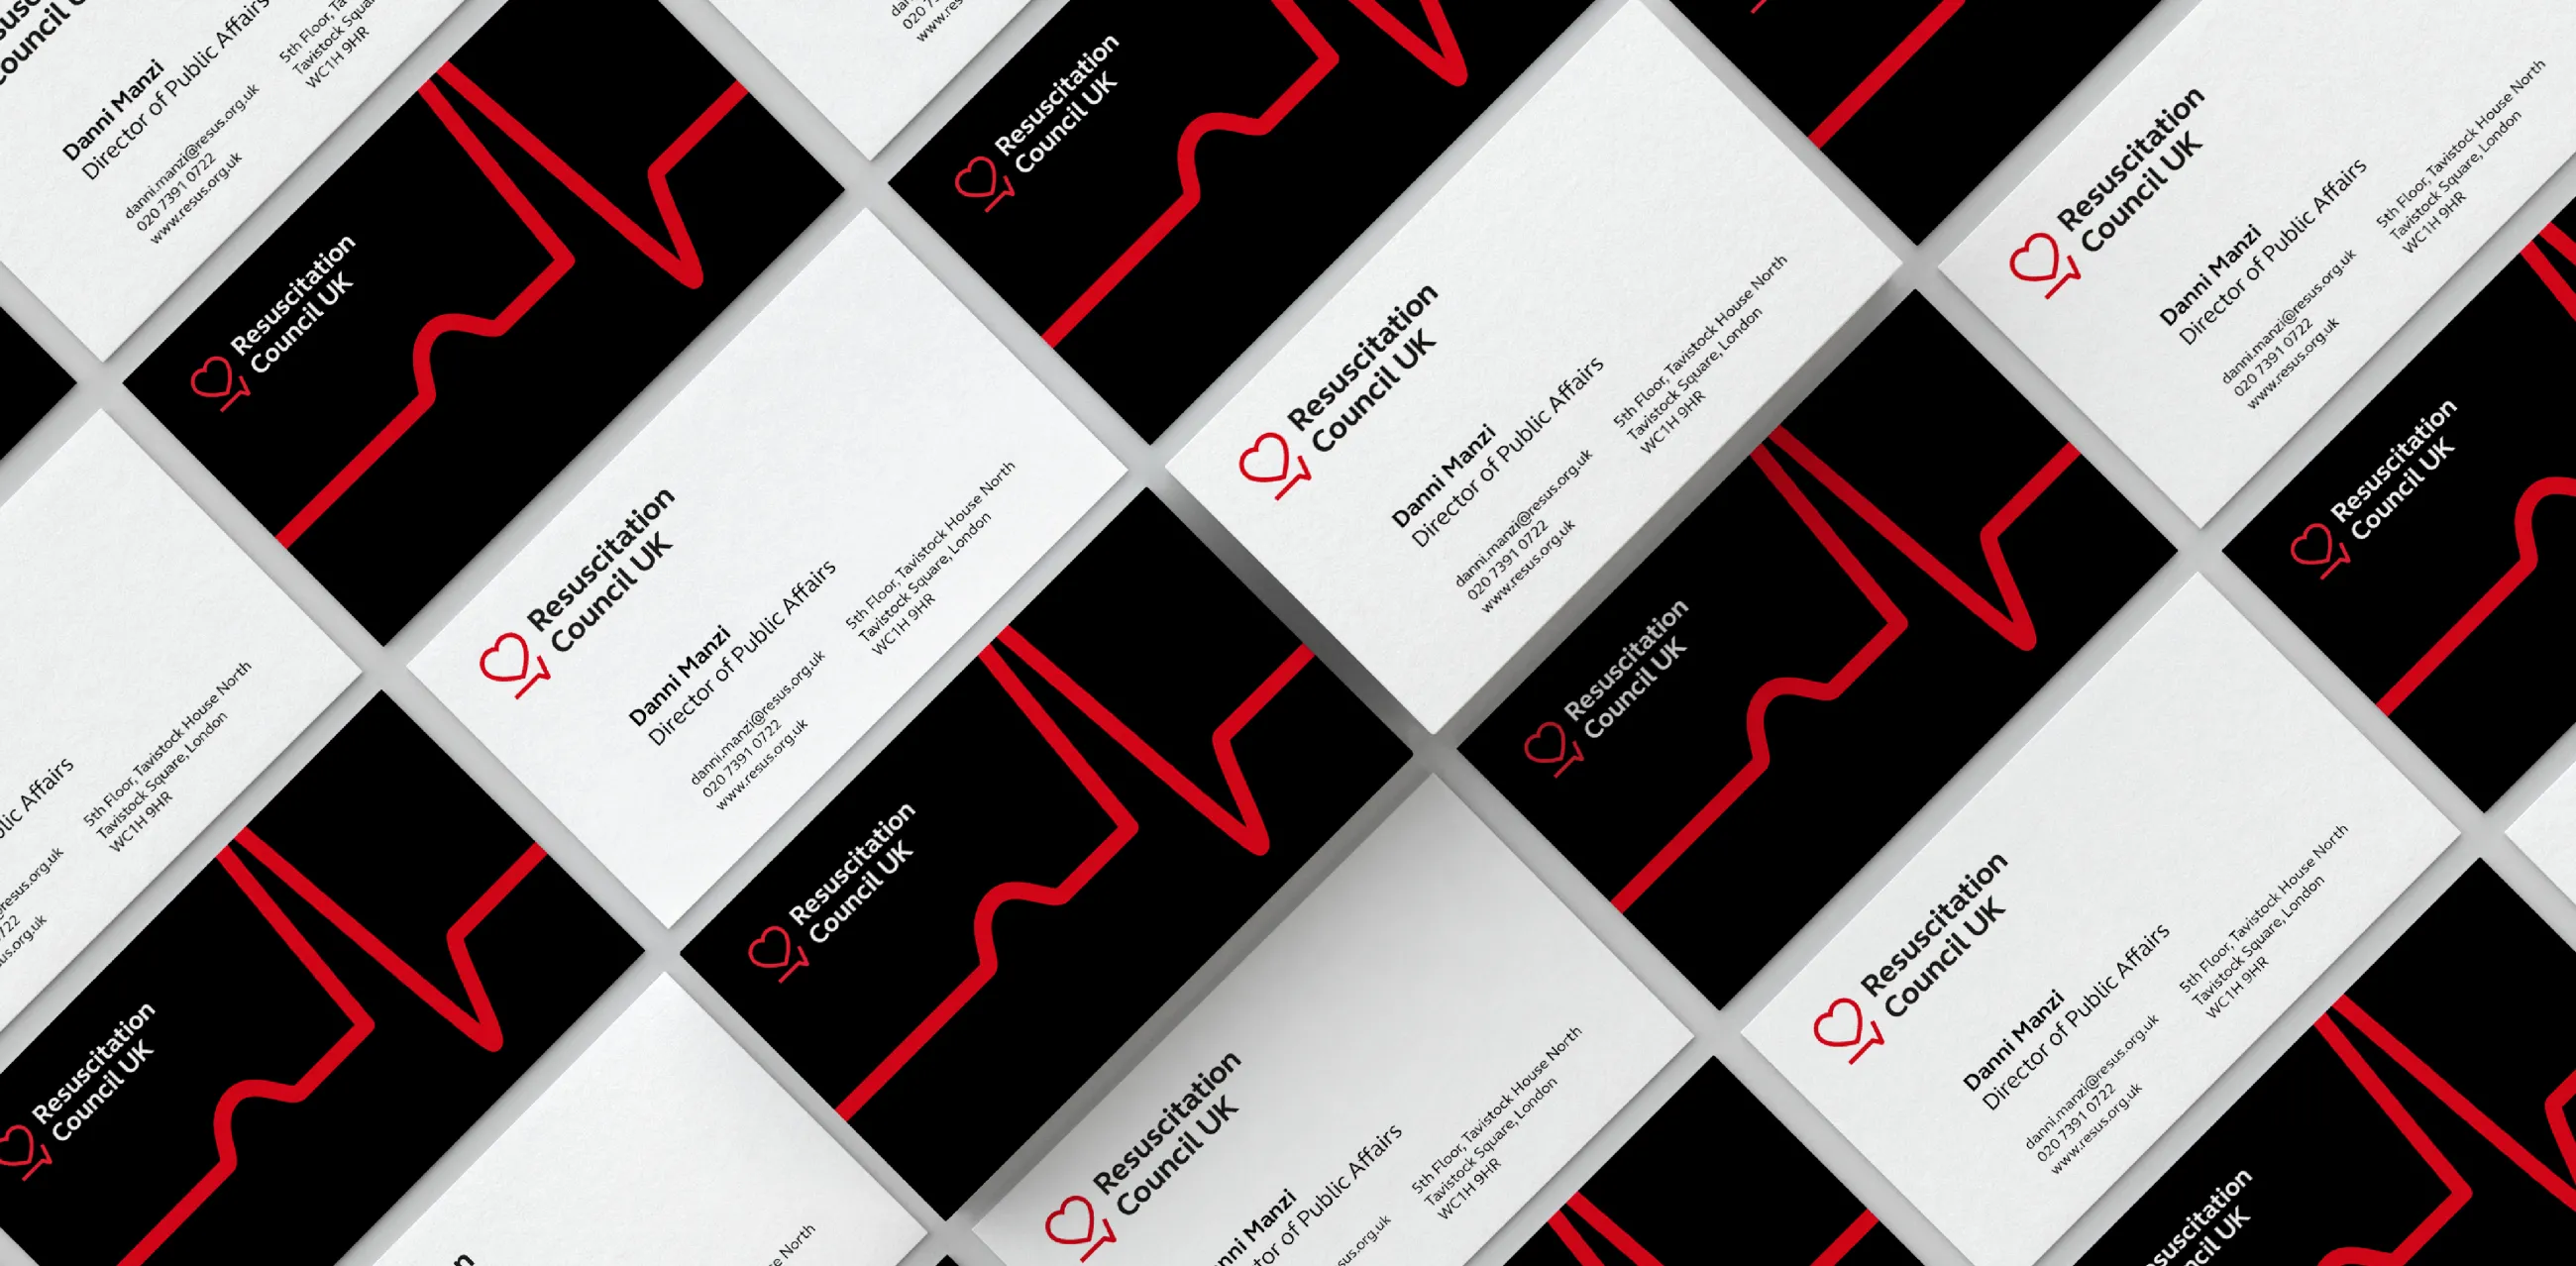 Resuscitation Council UK Business Cards